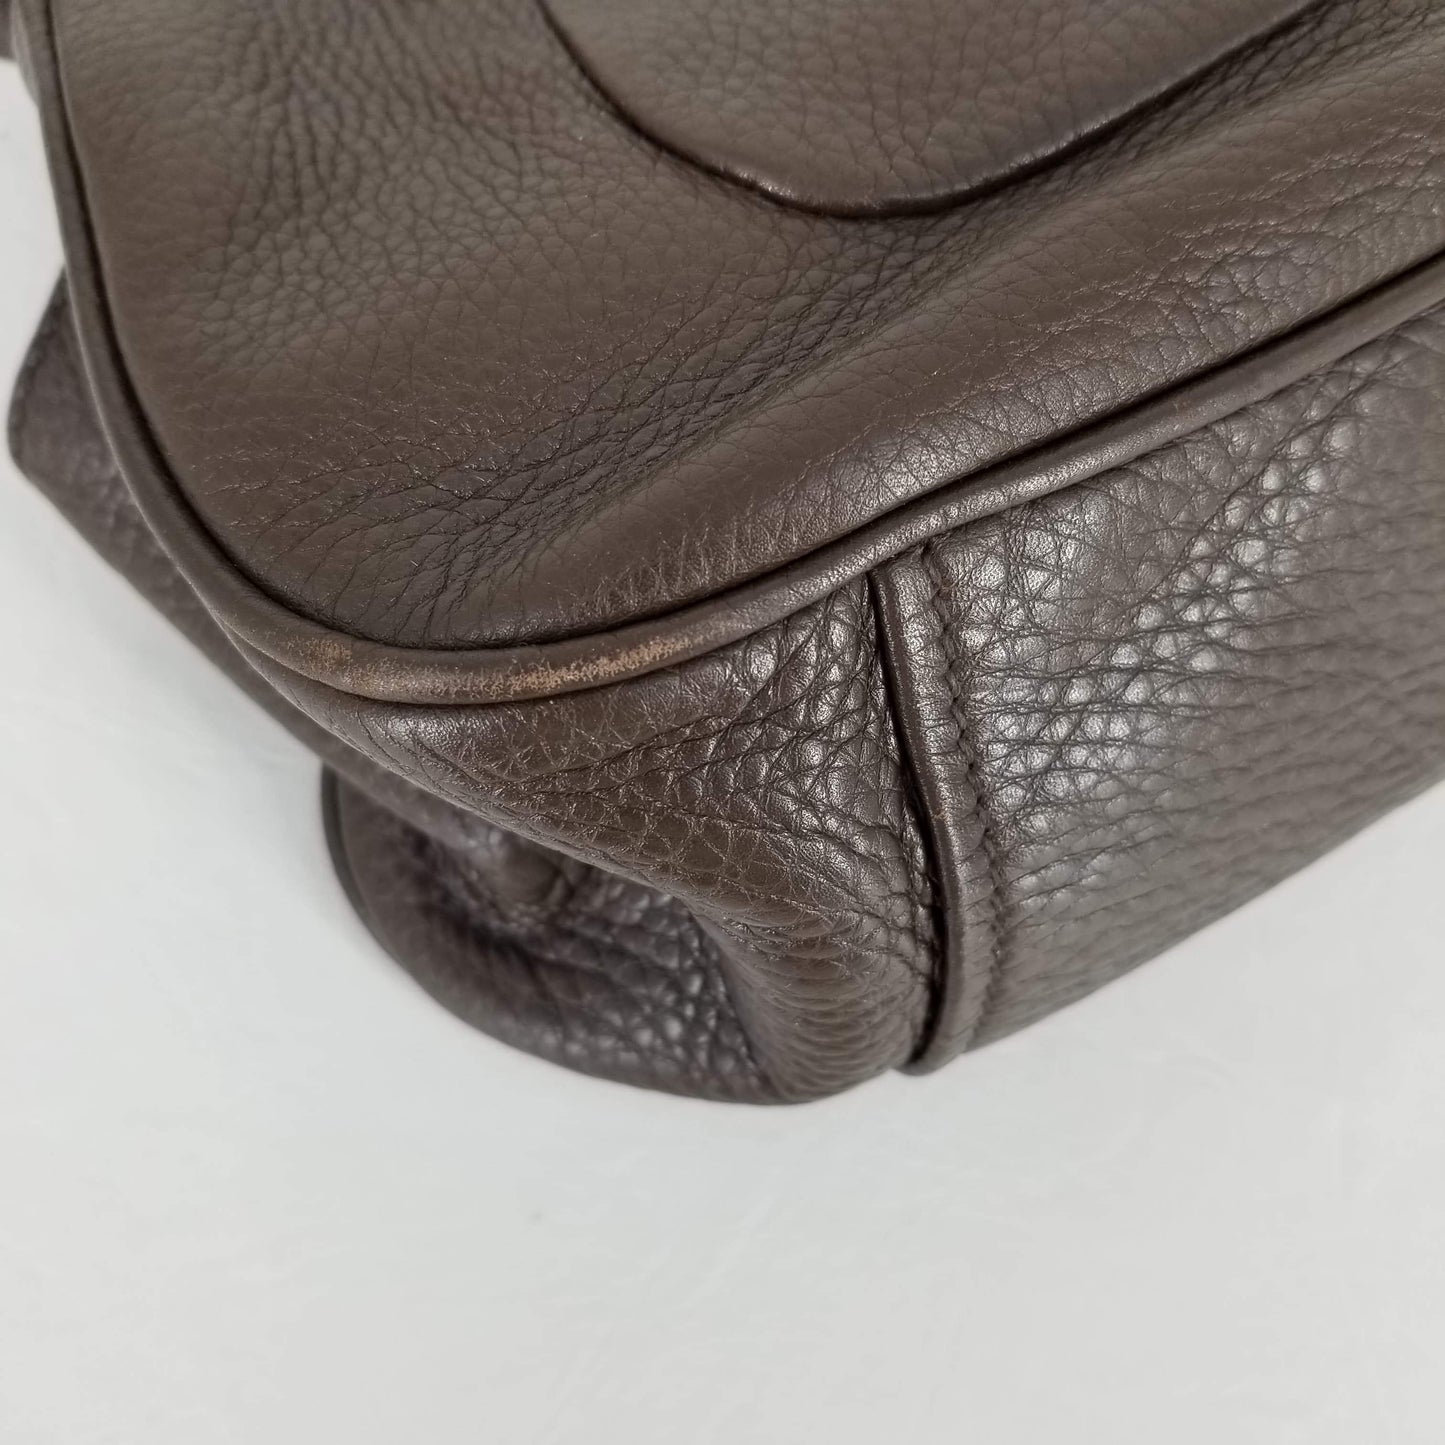 Authentic Prada Brown Leather Shoulder Bag